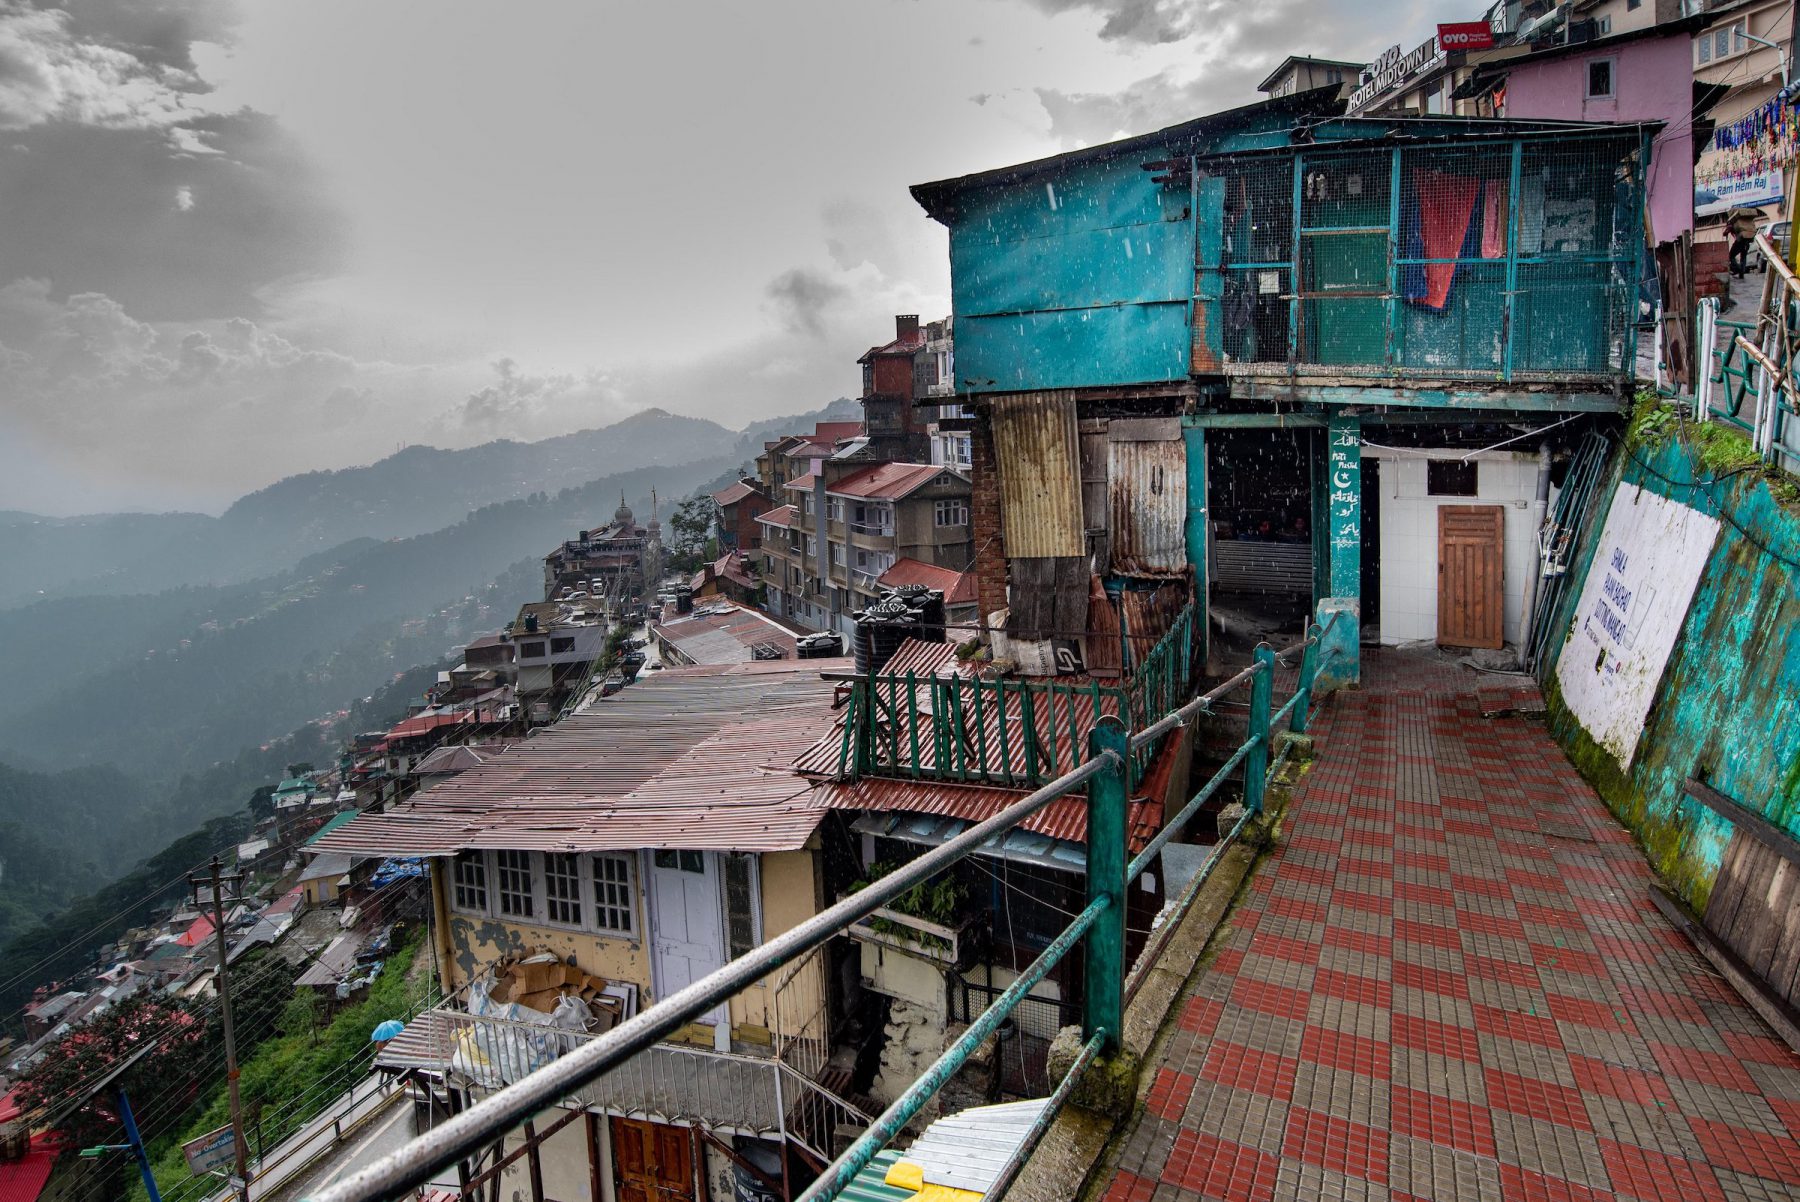 slums in Ganj Road, Shimla